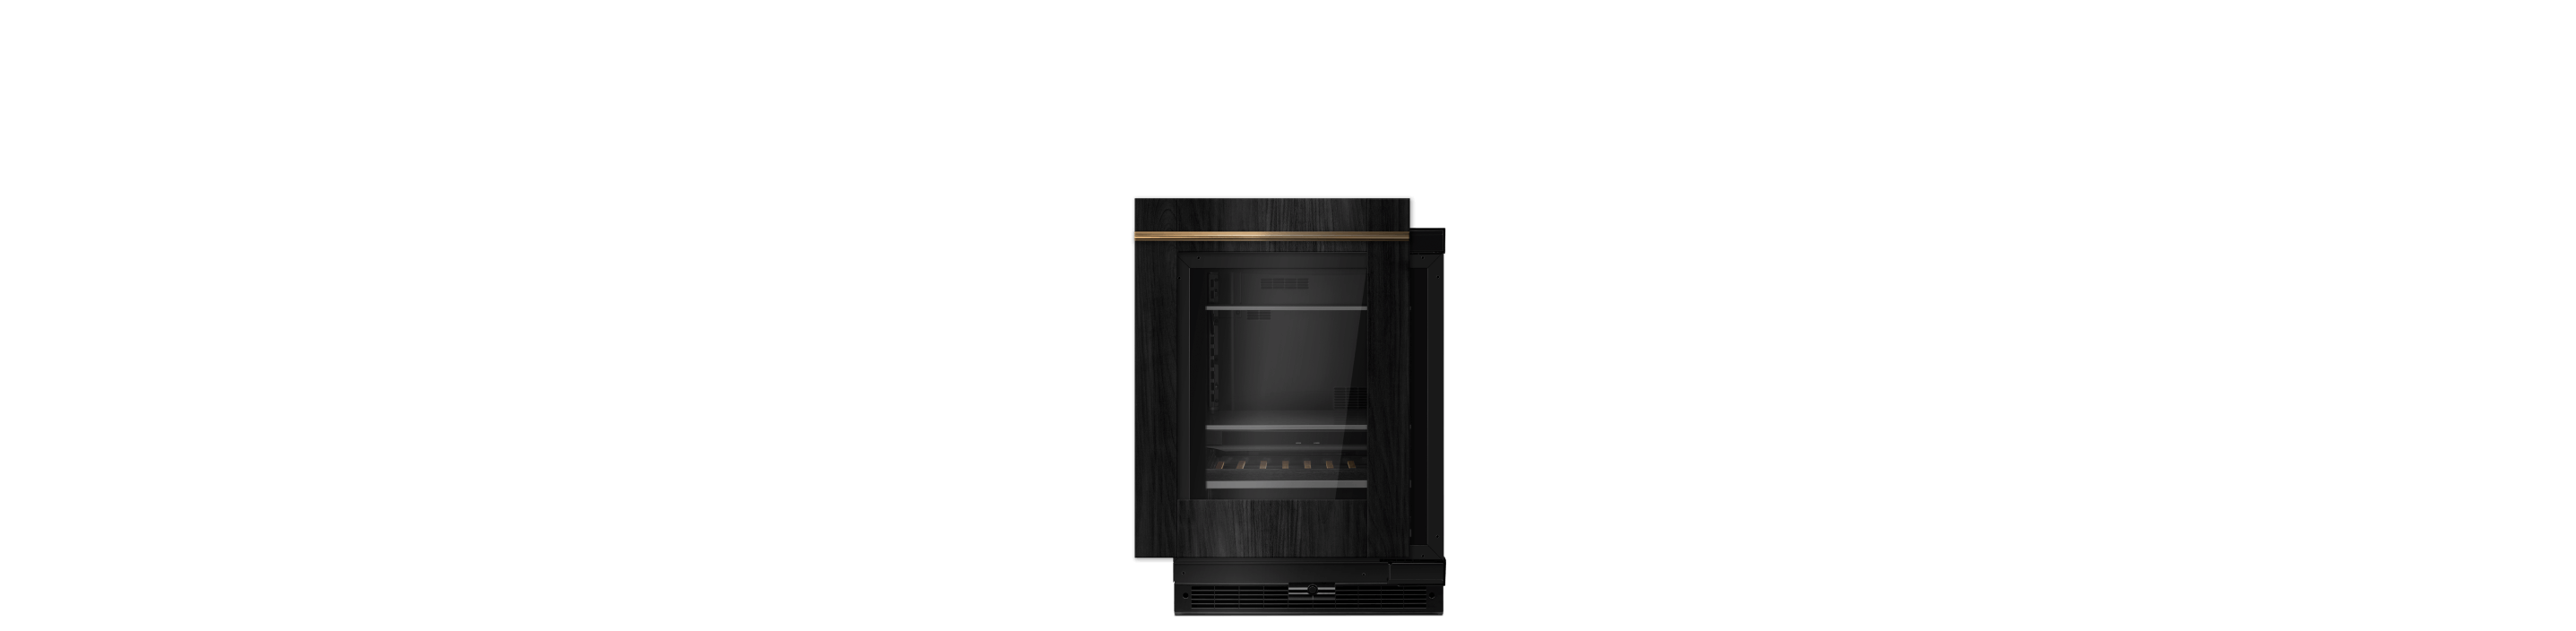 Upright Freezer, 5 cu ft - appliances - by owner - sale - craigslist